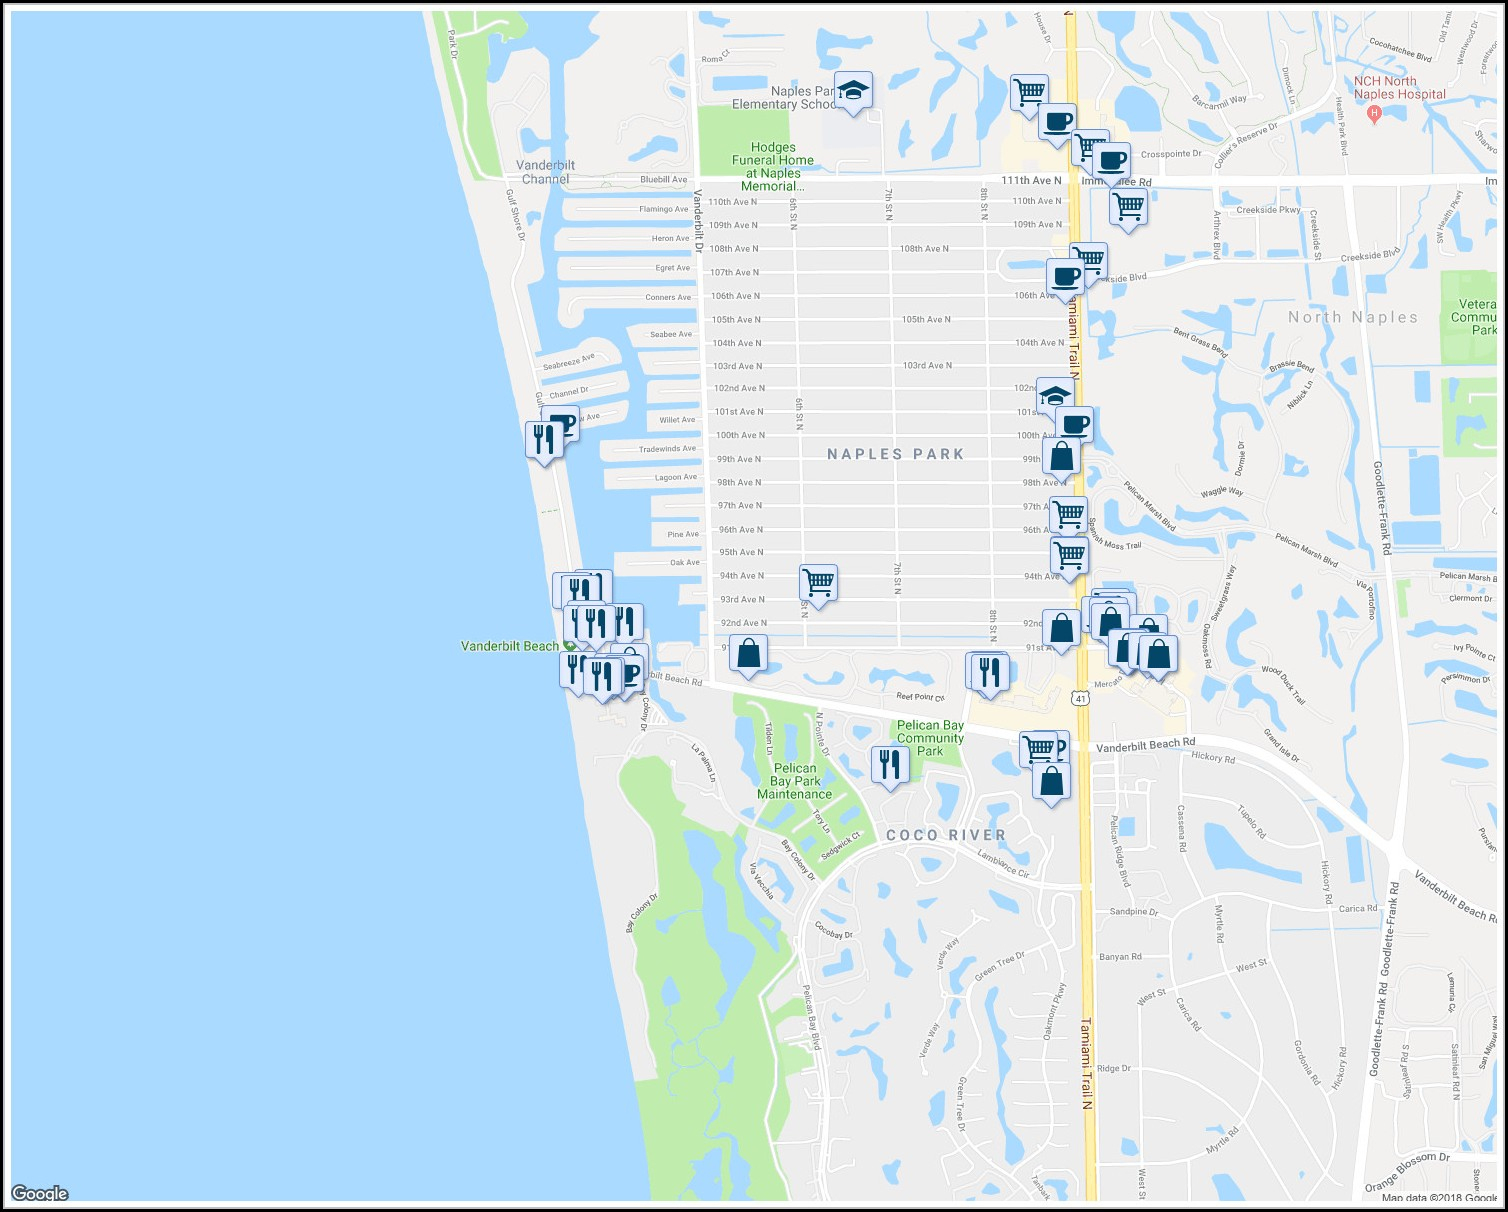 Map Of Naples Florida Neighborhoods - Map : Resume Examples #9X8Rvaz8Dr - Map Of Naples Florida Neighborhoods